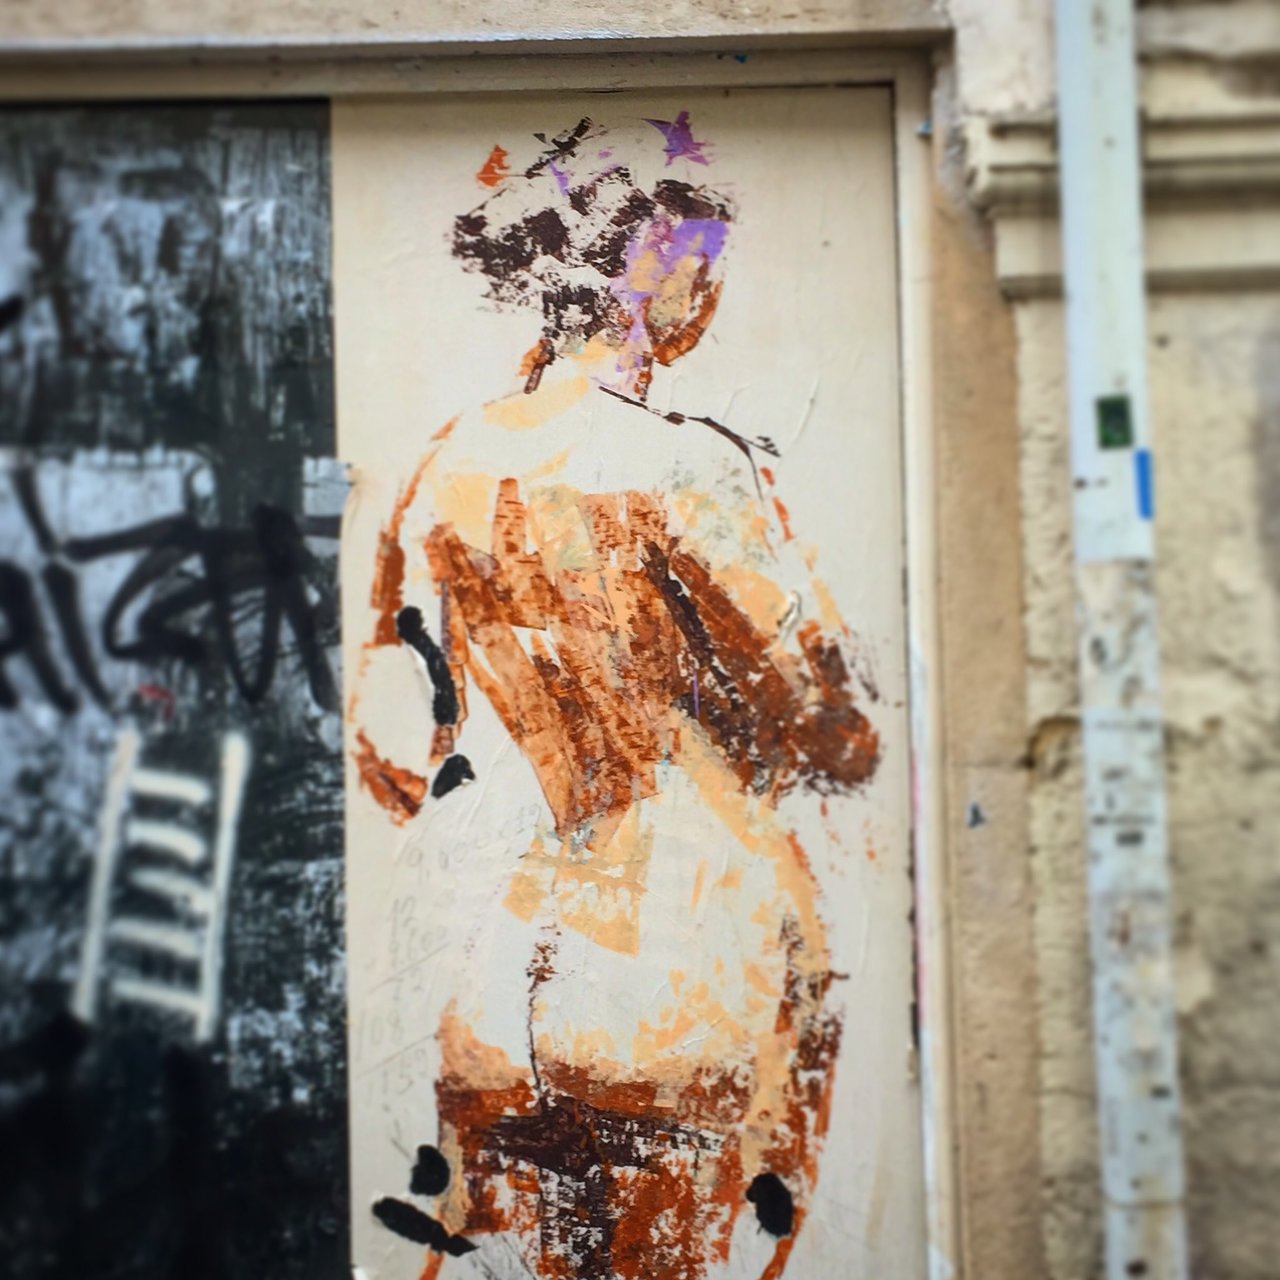 Naked woman by #raphaelgindt #naked #streetart #urbanart #graffiti #graff #wall #spray #bombing #paris https://t.co/jZLTIeyy1C